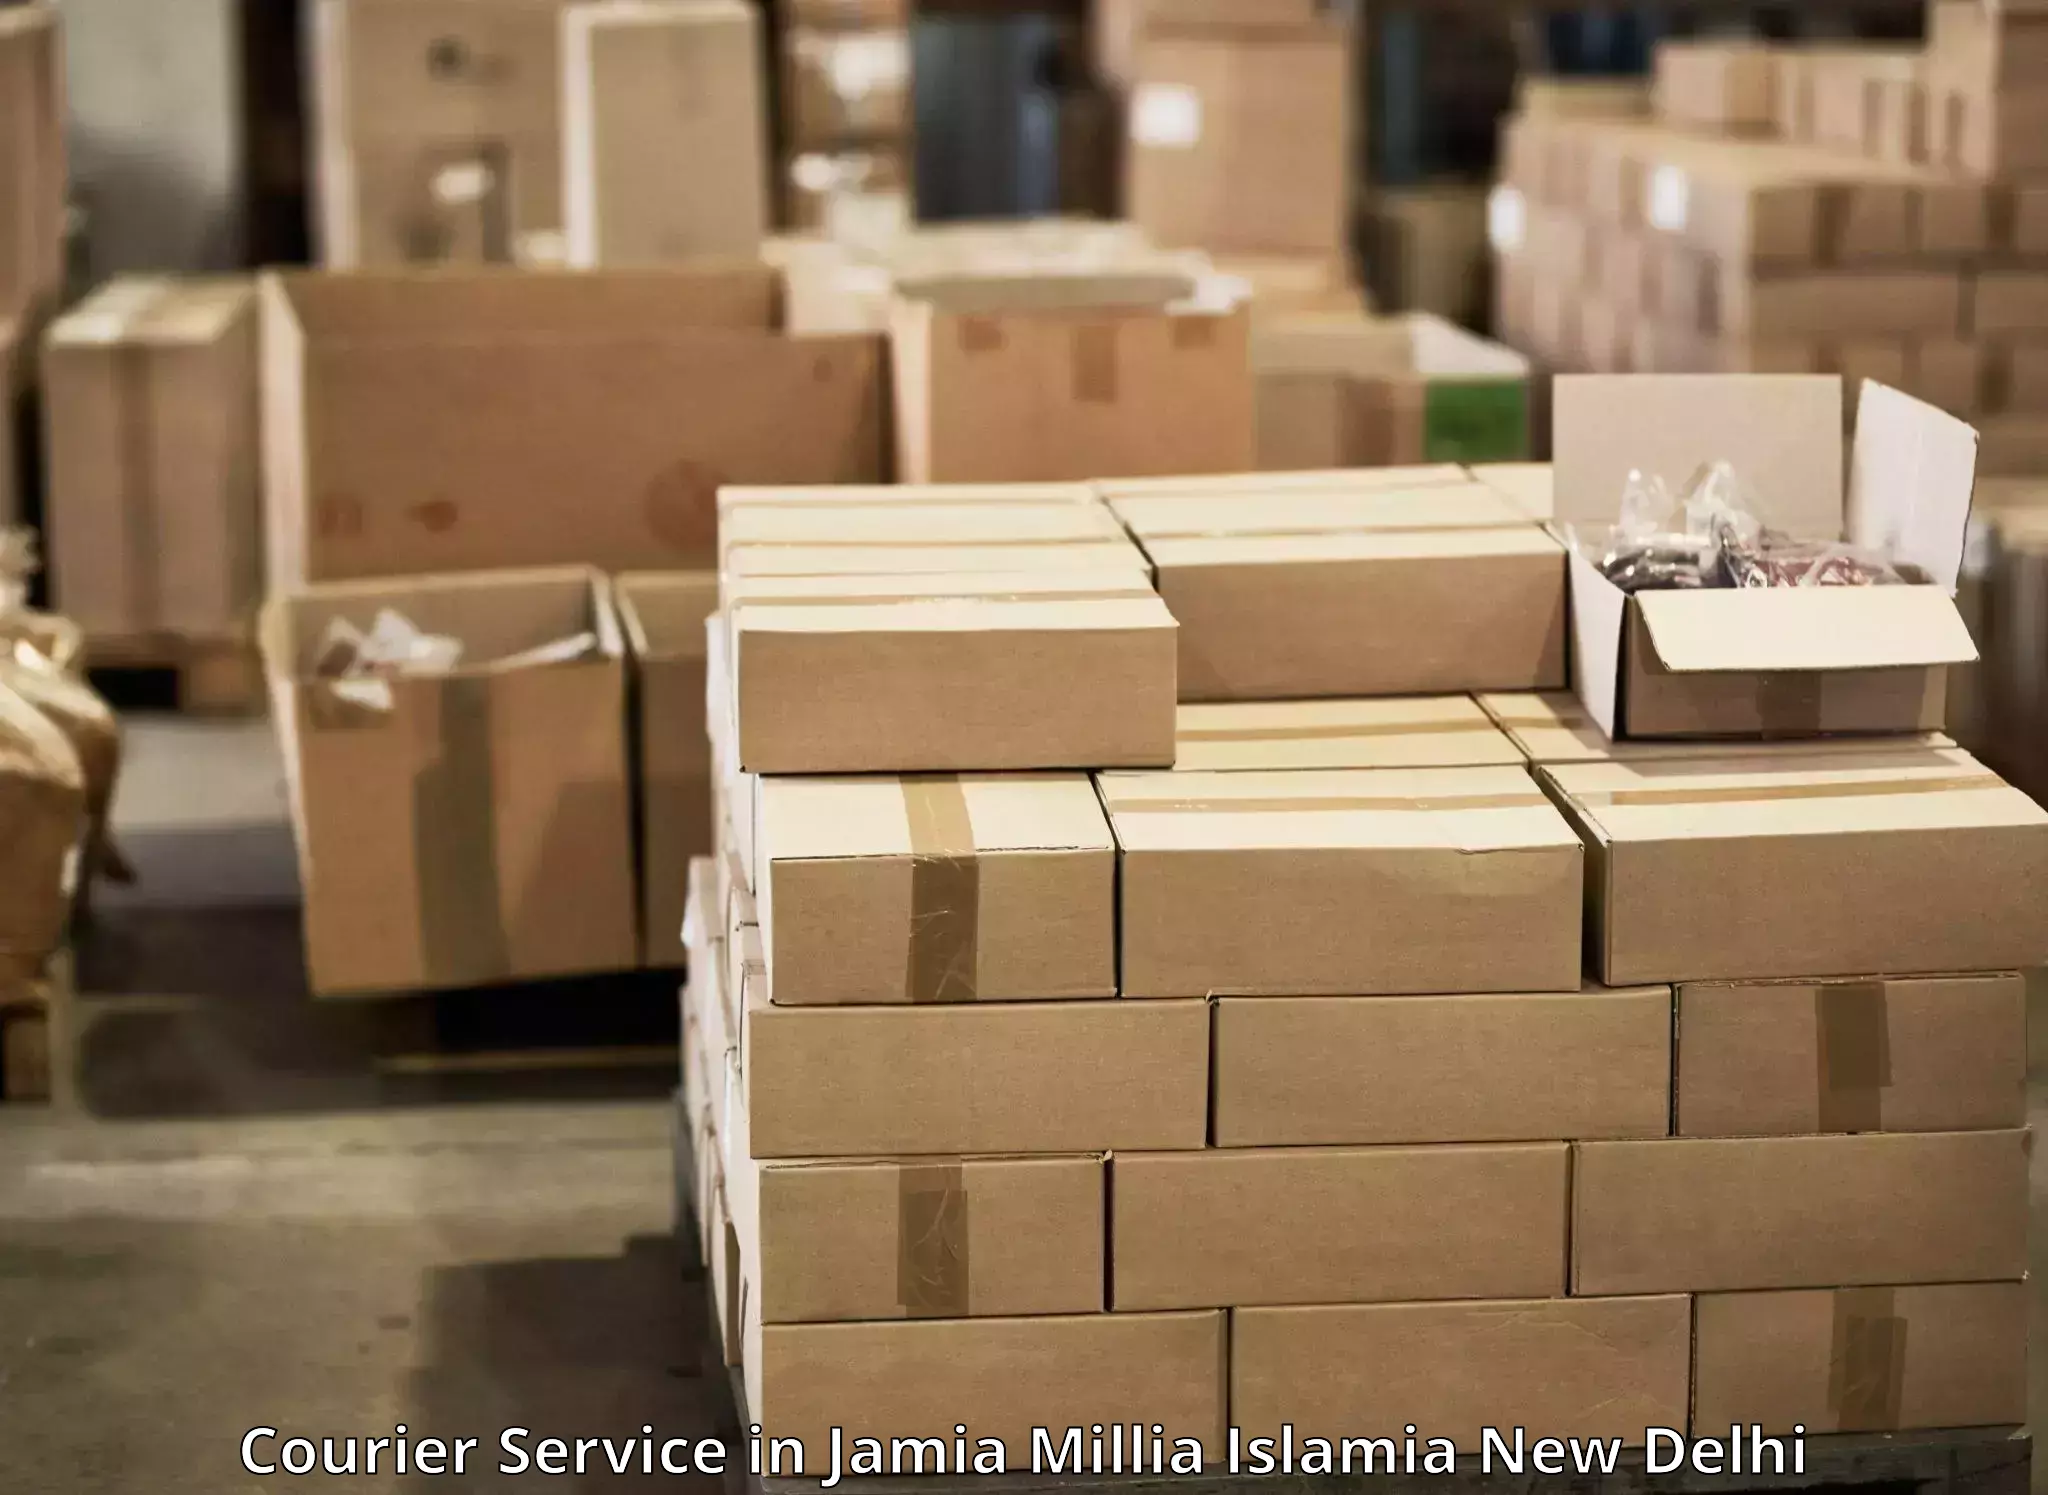 Sustainable delivery practices in Jamia Millia Islamia New Delhi